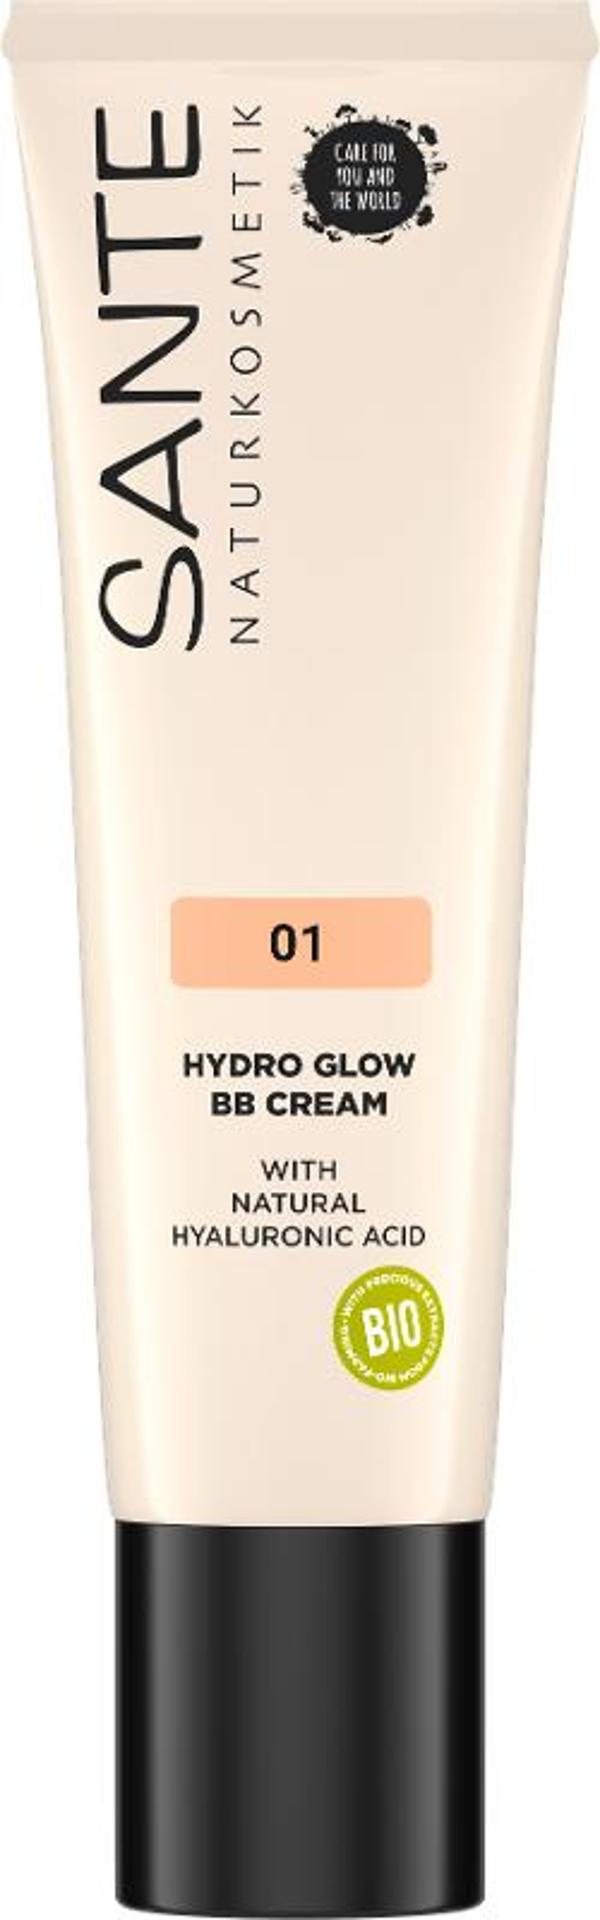 Produktfoto zu Hydro Glow BB Cream 01 Light-Medium 30ml